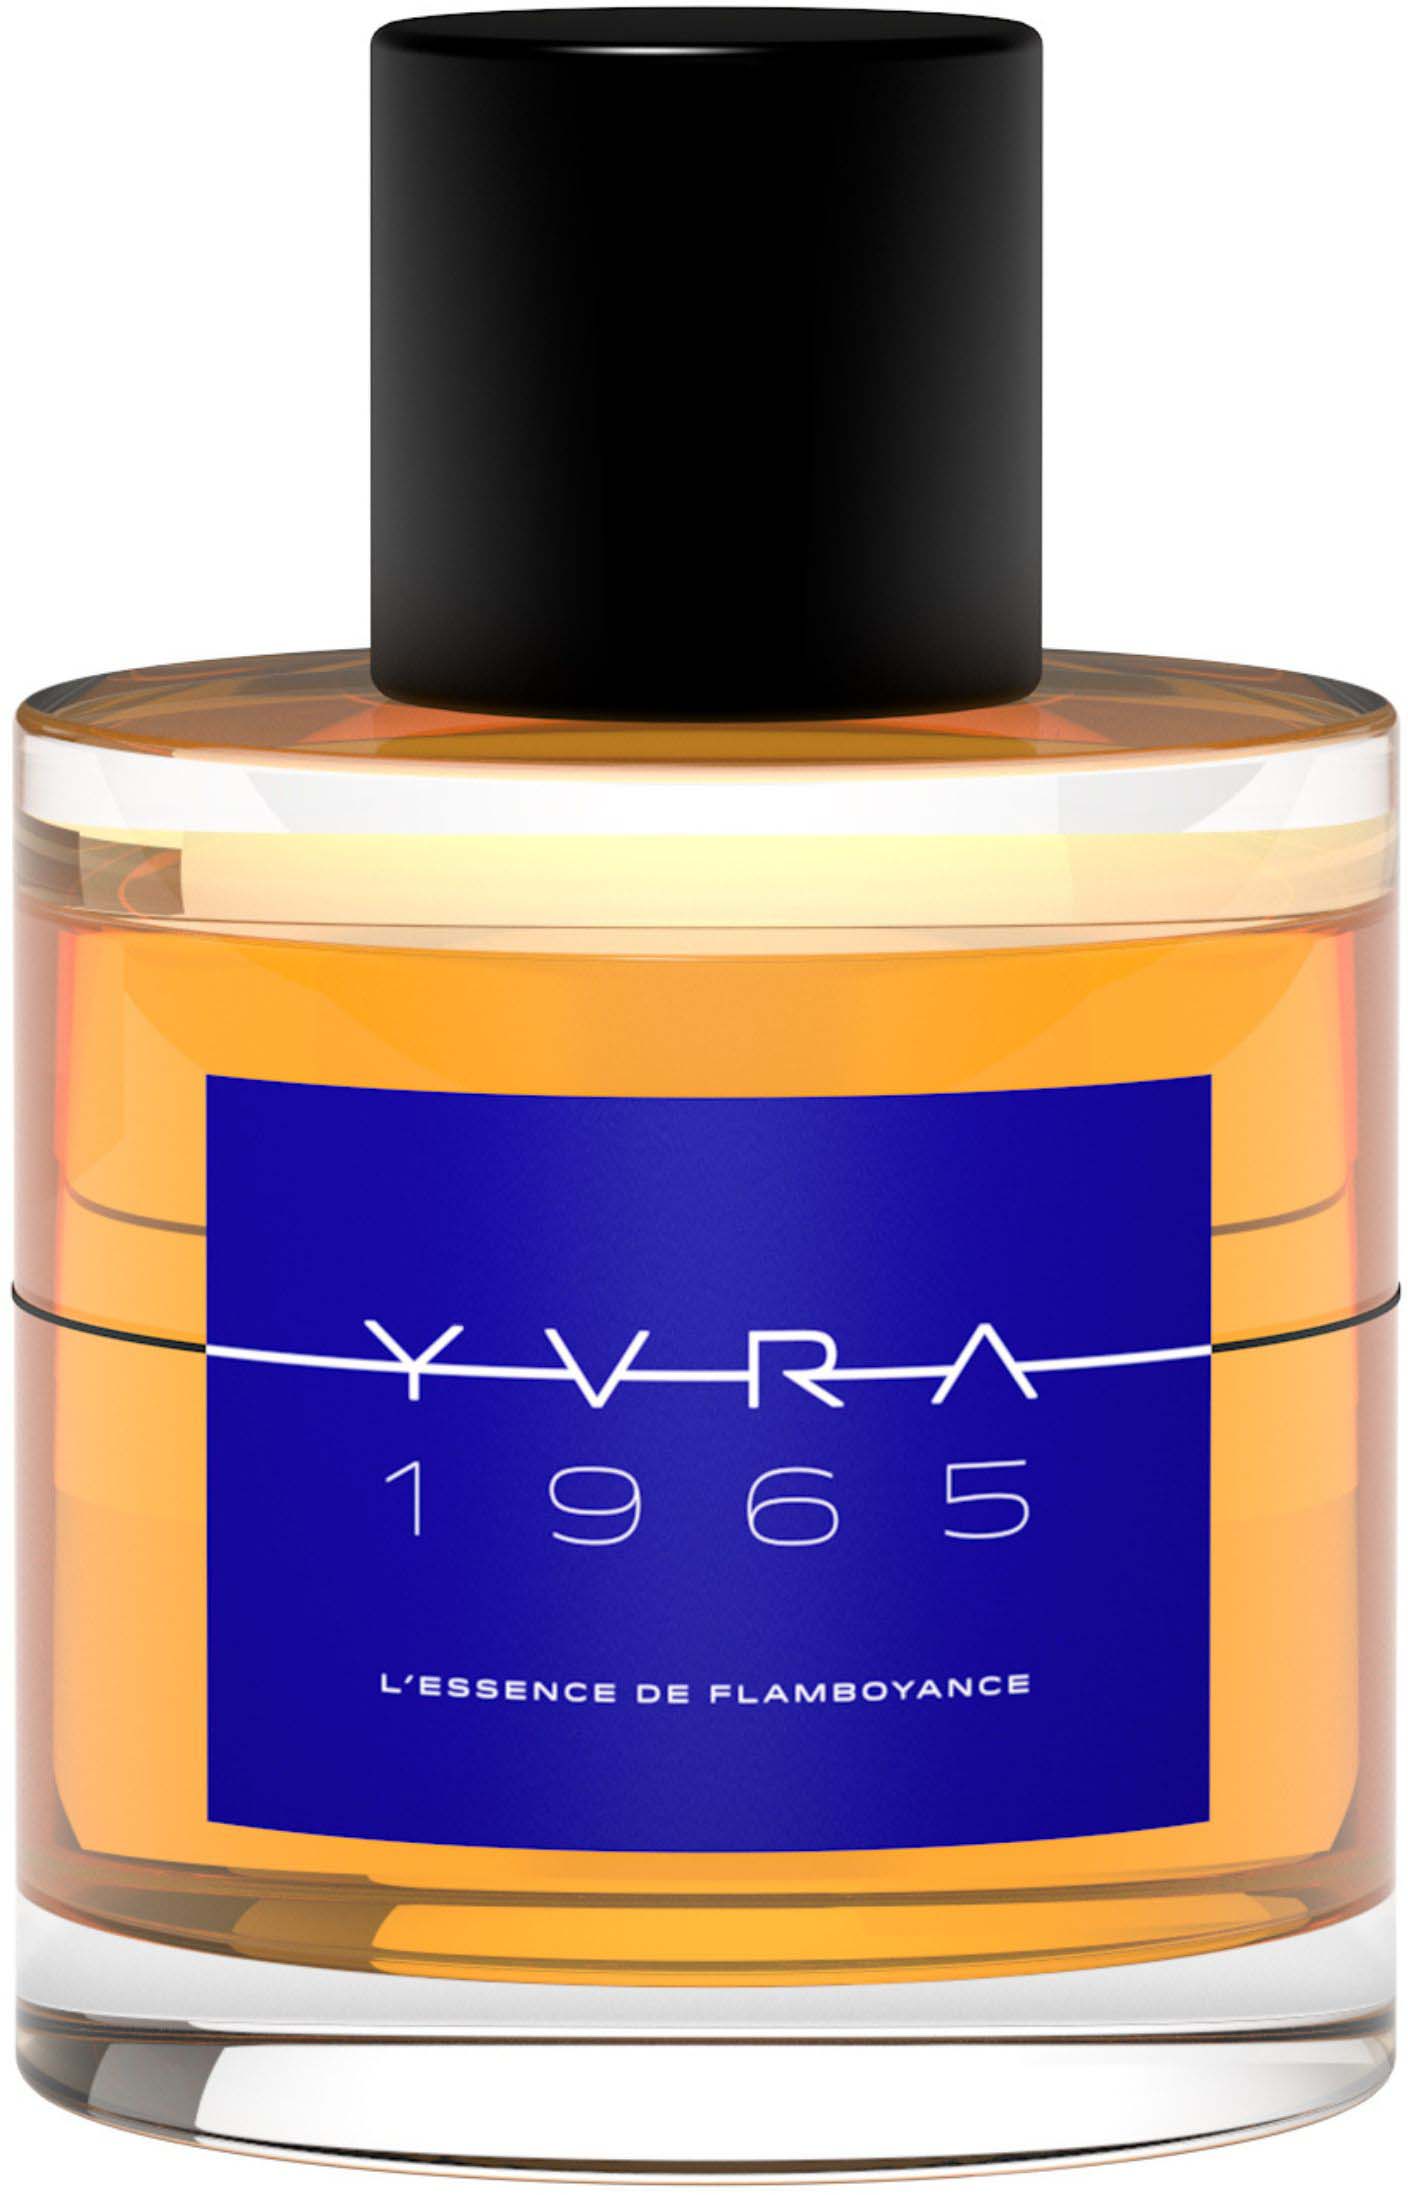 yvra 1965 - l'essence de flamboyance woda perfumowana 100 ml   